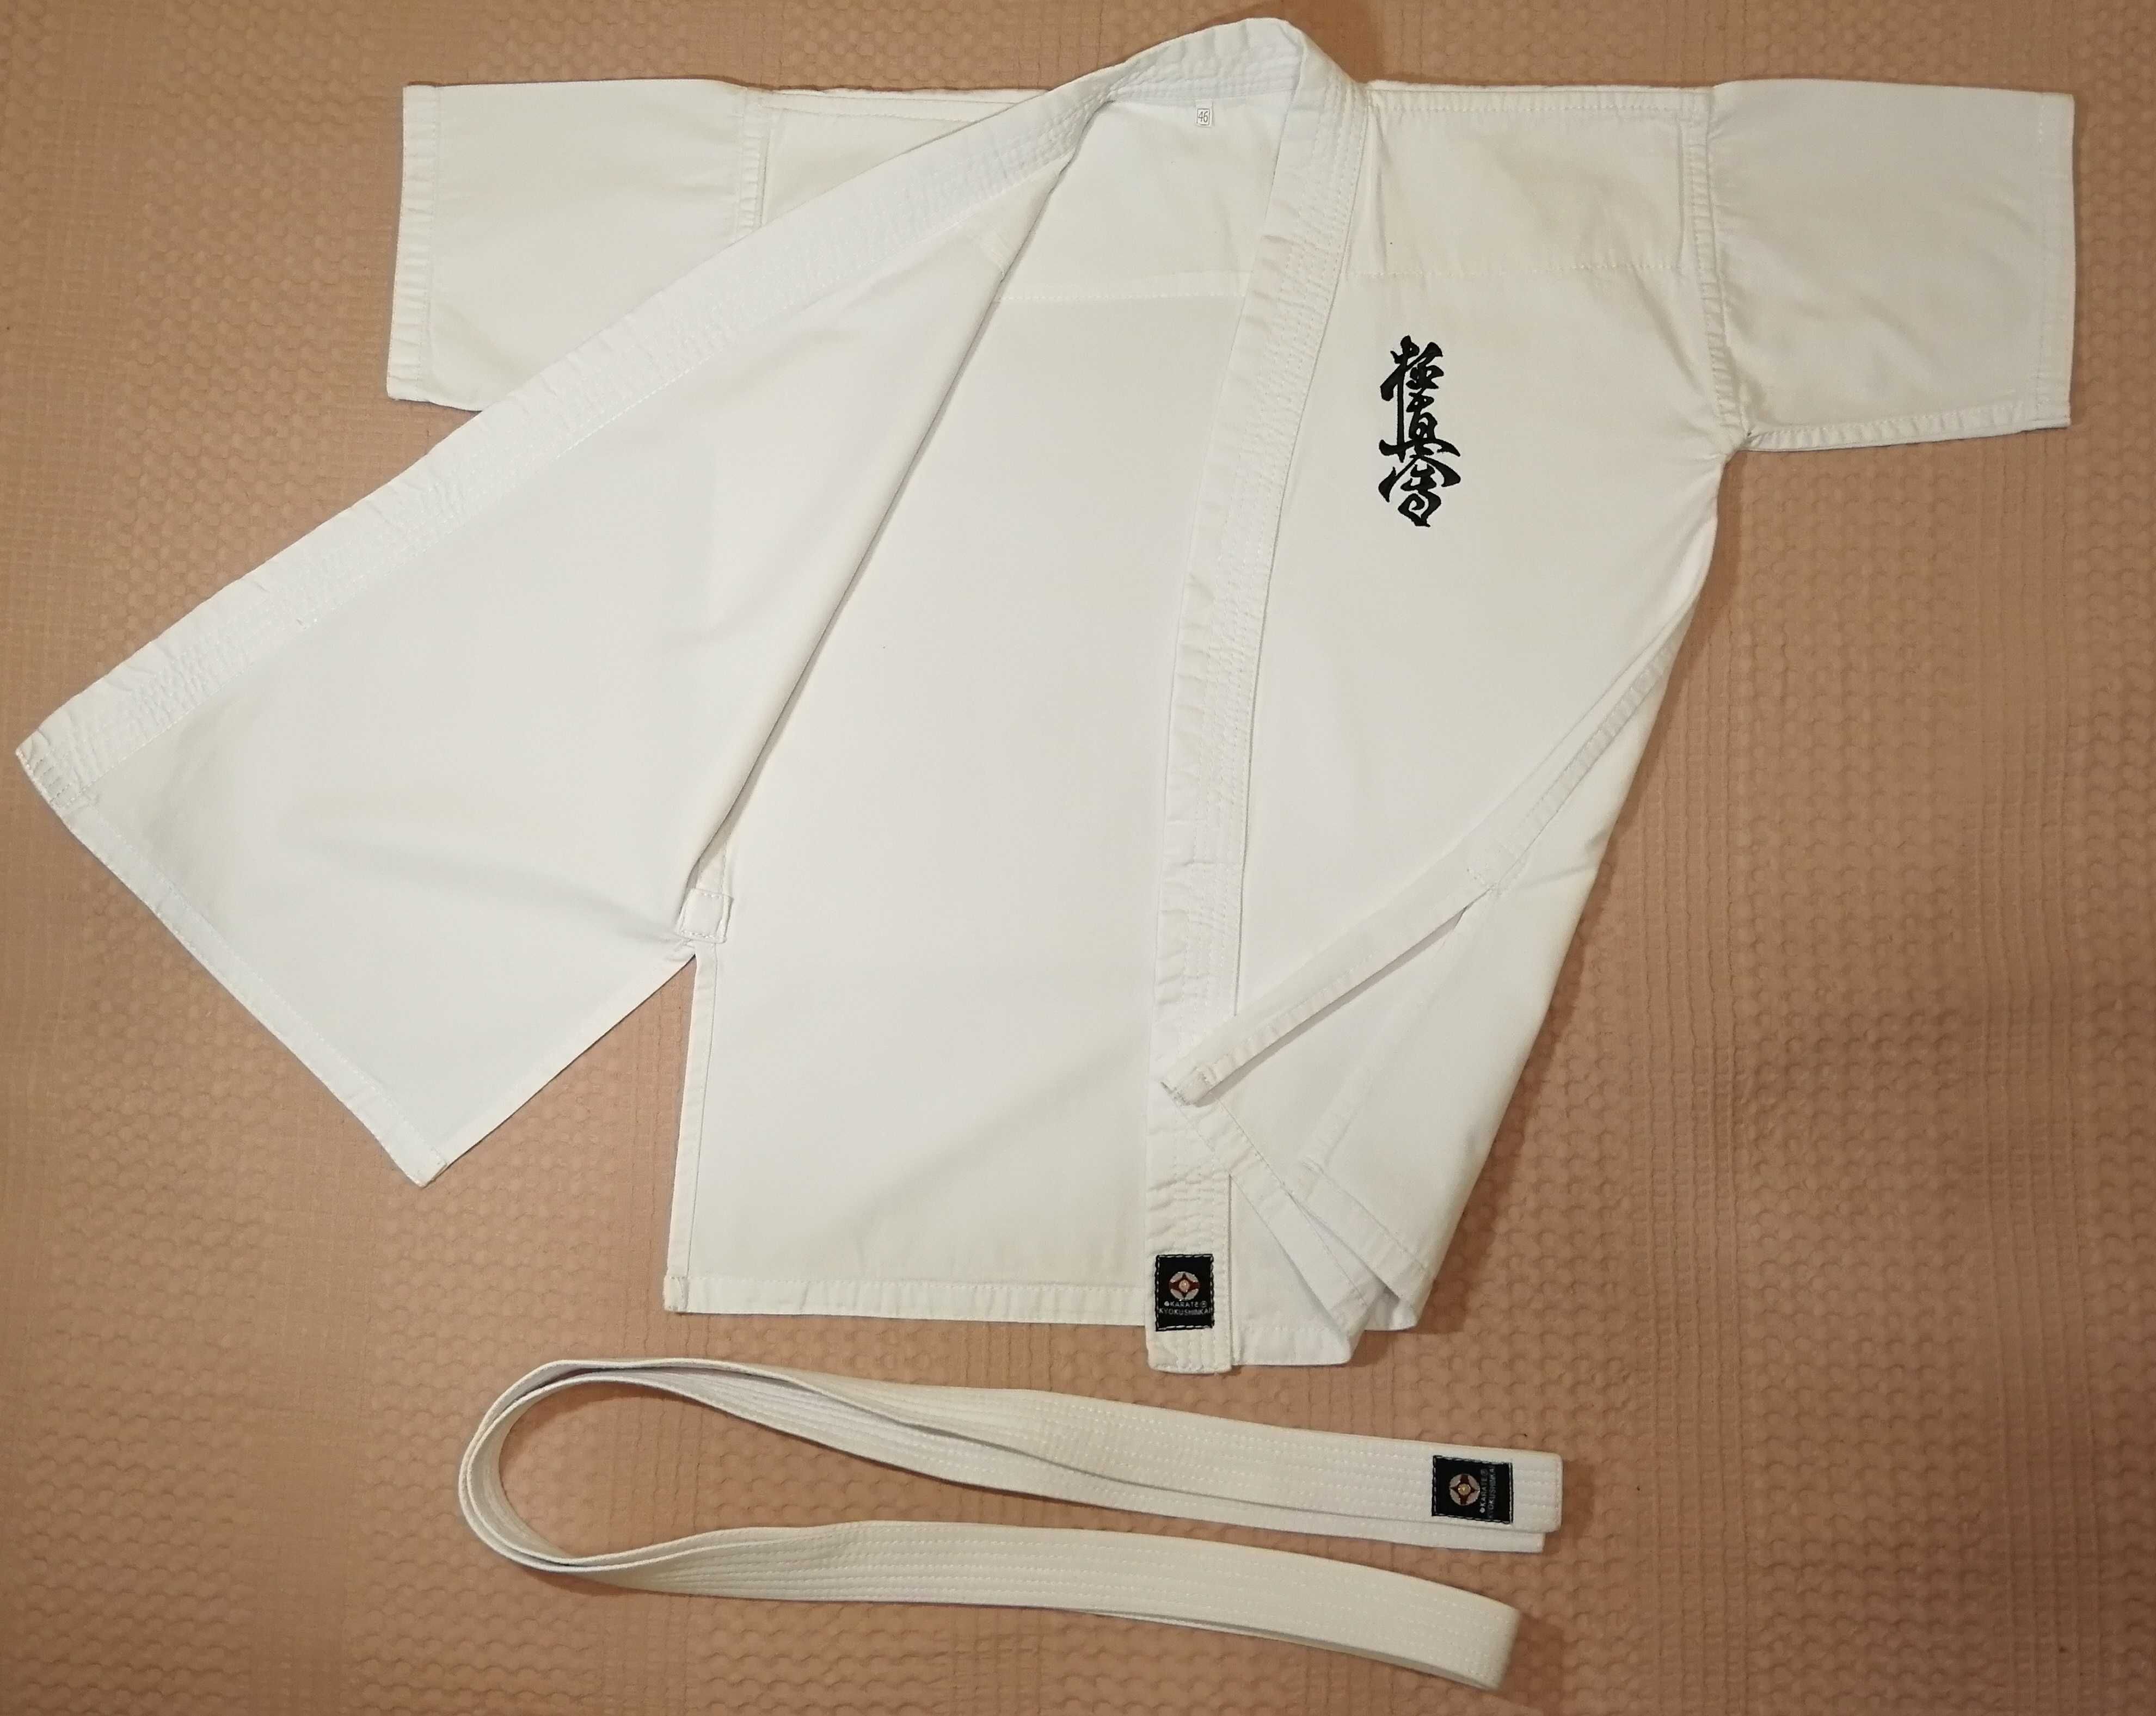 Кимоно для занятий каратэ KYOKUSHINKAI  (Размер 46)